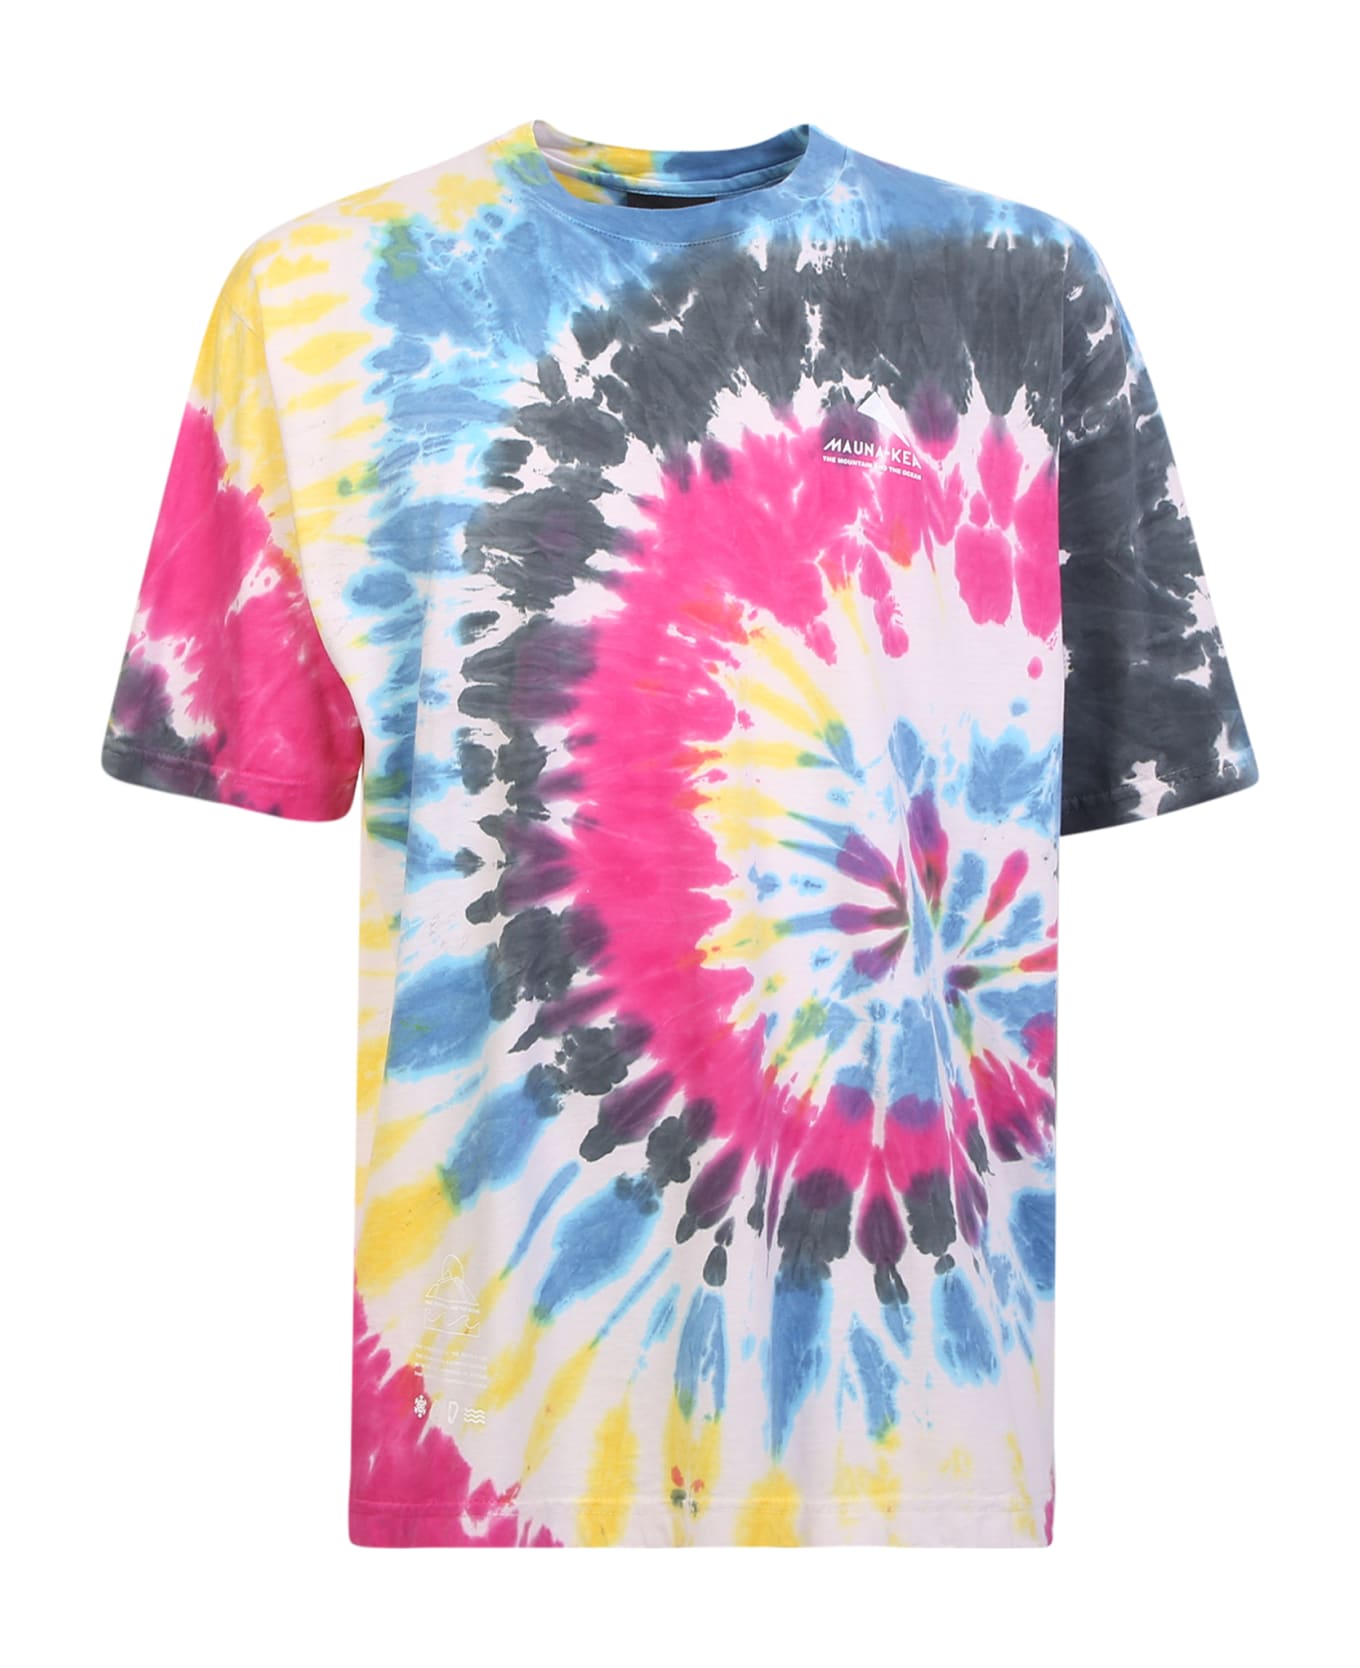 Mauna Kea Tie Dye Cotton T-shirt - Multi